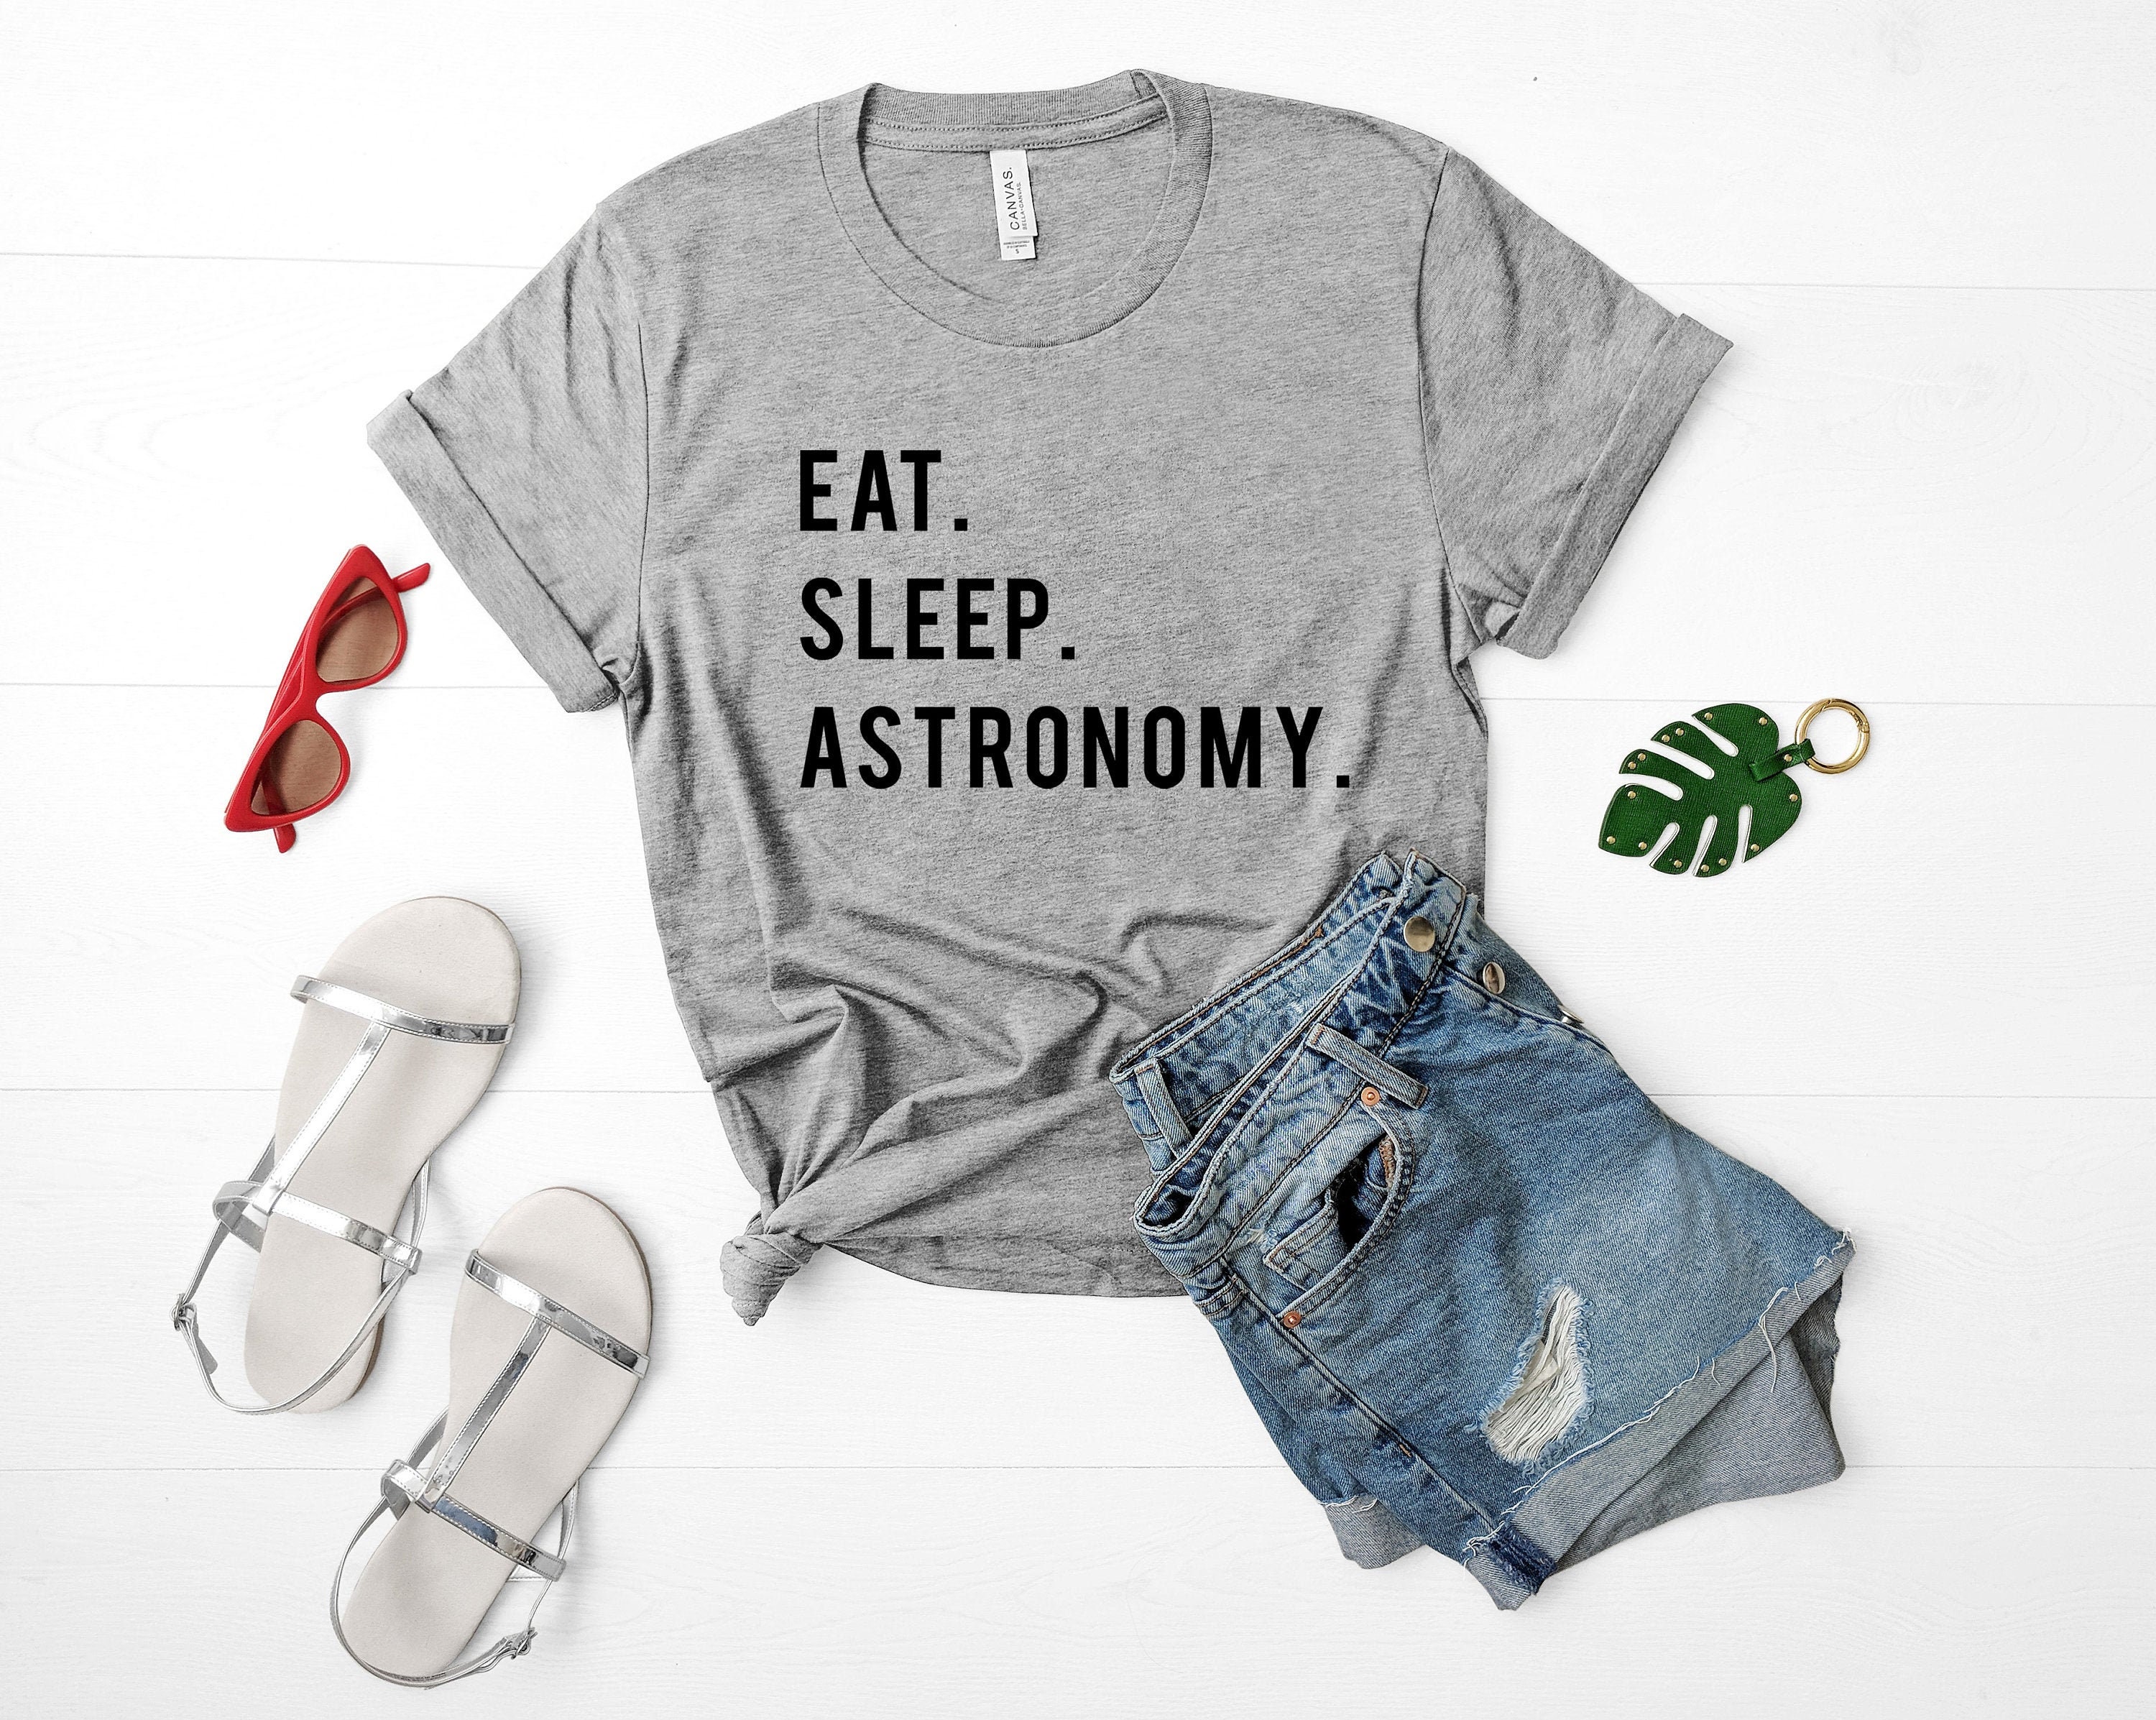 Astronomy T-Shirt, Gift, Eat Sleep Shirt Mens Womens - 765